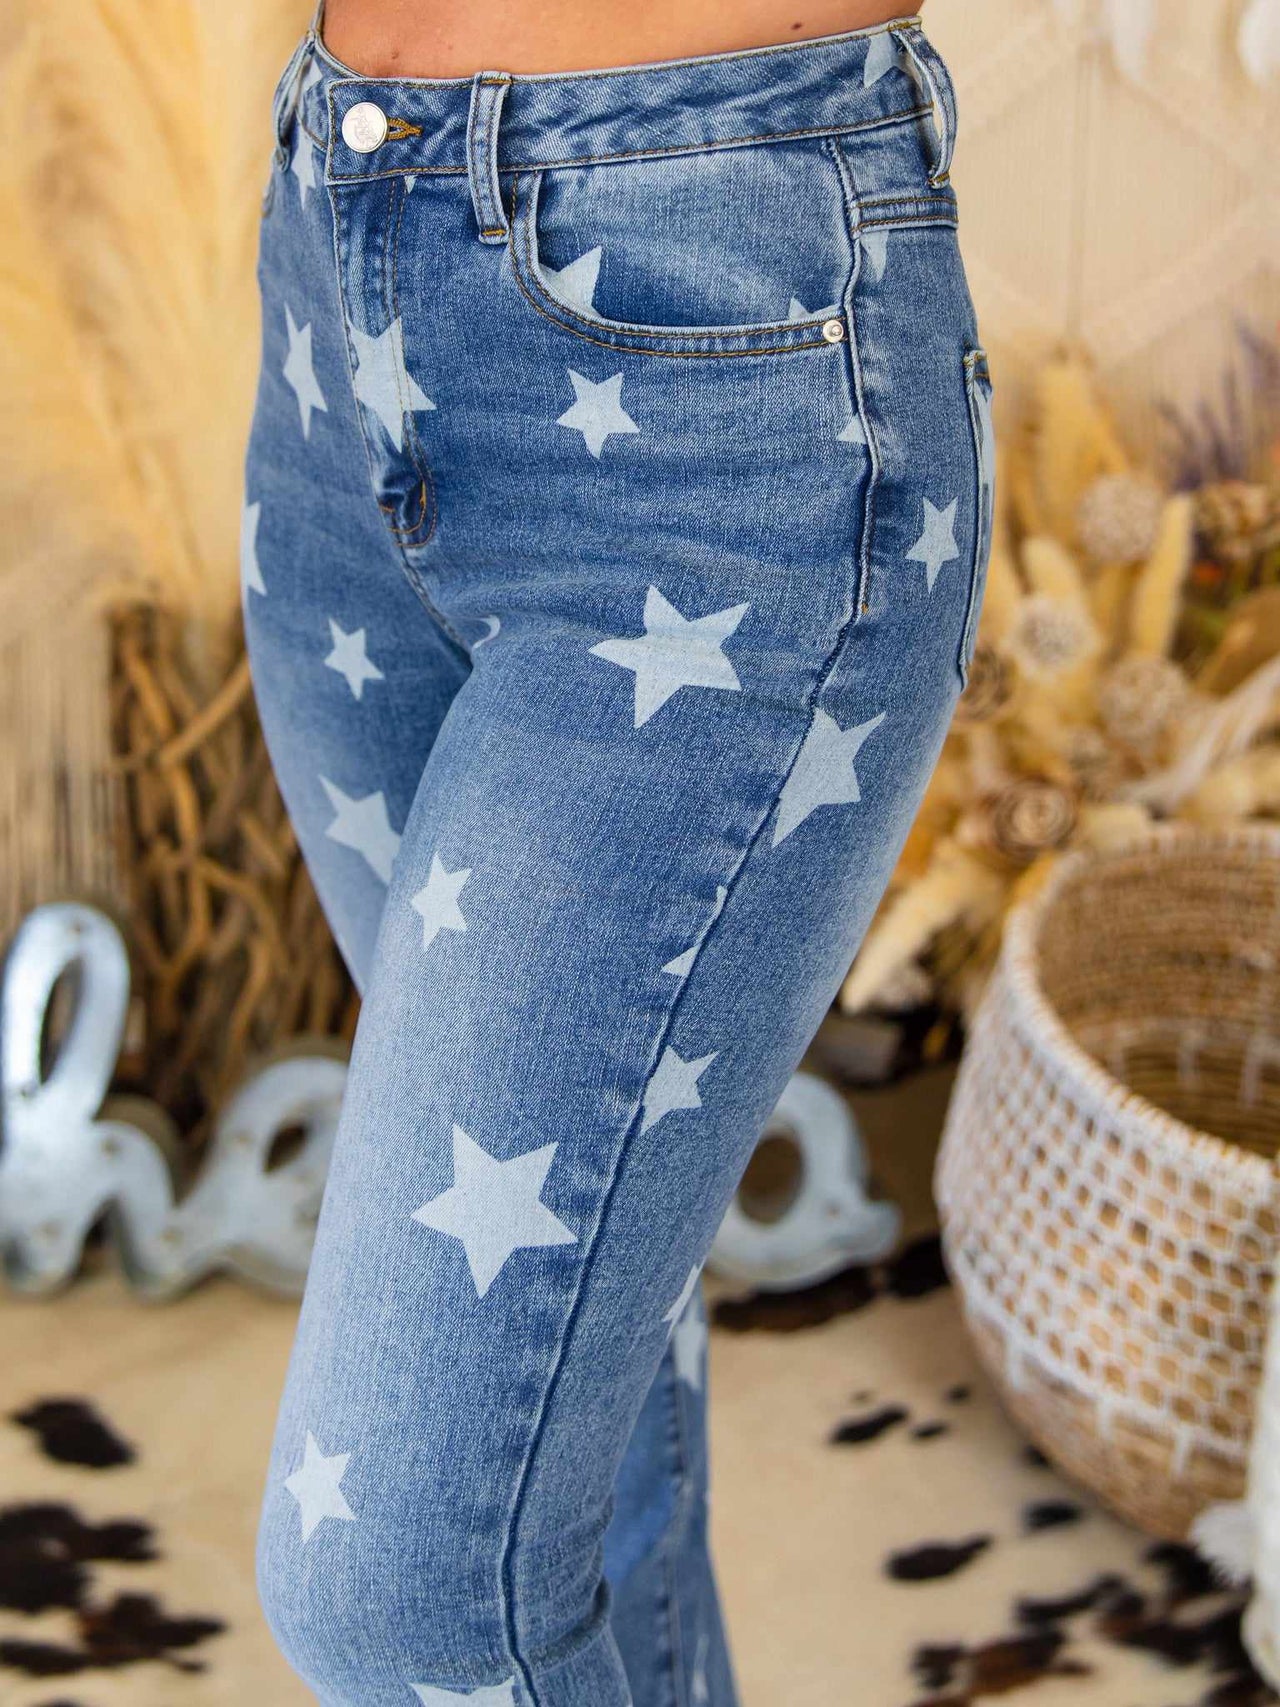 Star print jeans.